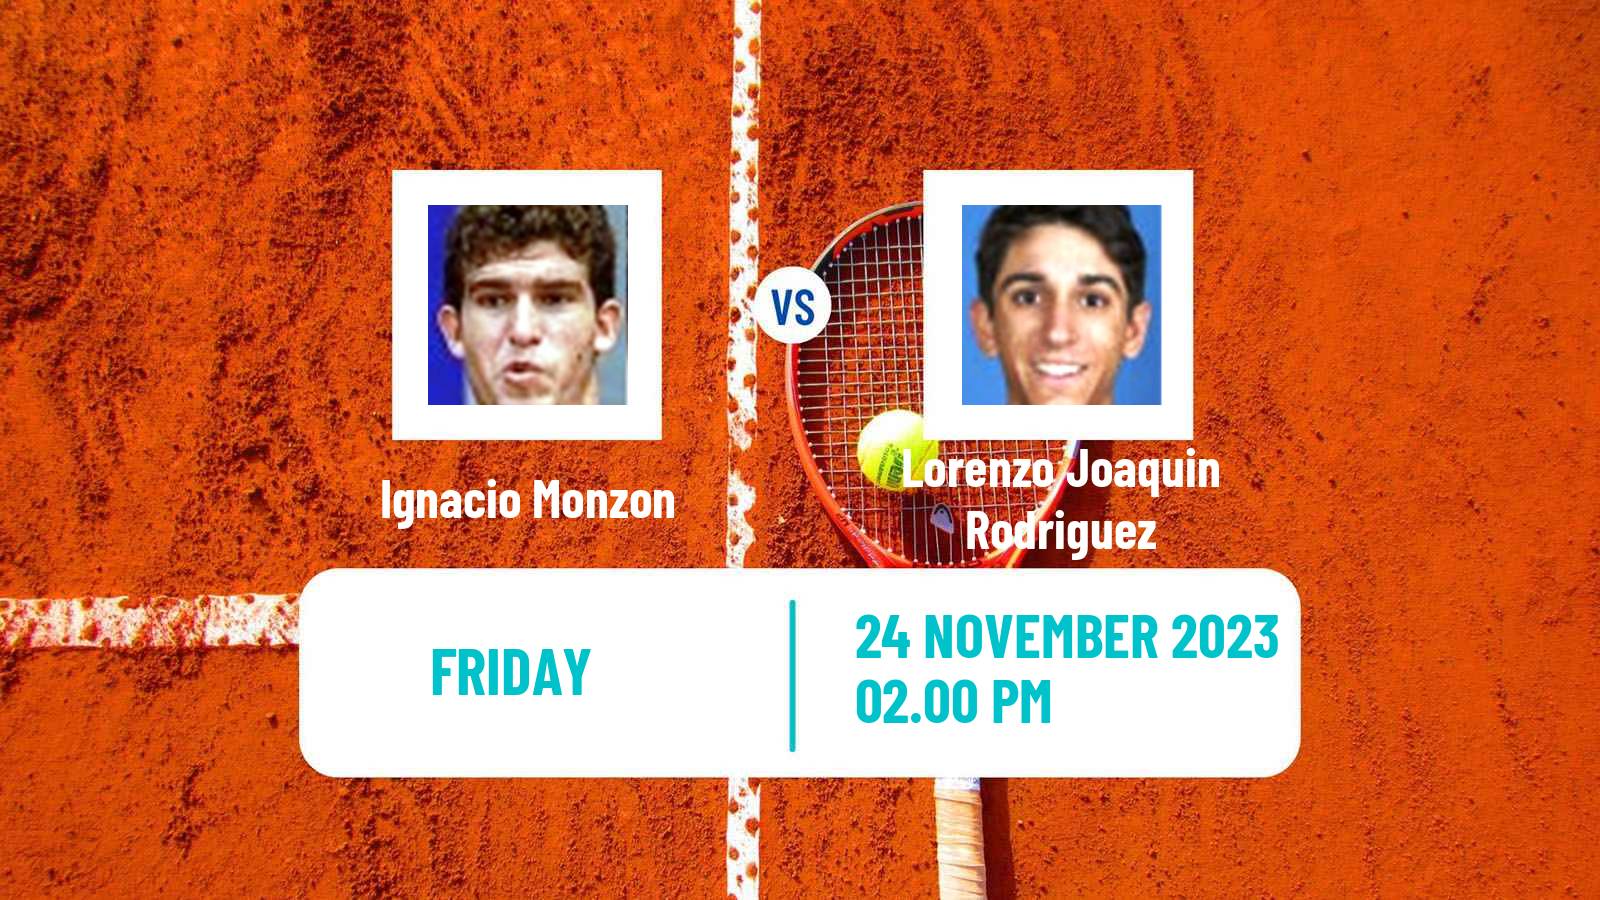 Tennis ITF M15 Santa Cruz Men Ignacio Monzon - Lorenzo Joaquin Rodriguez